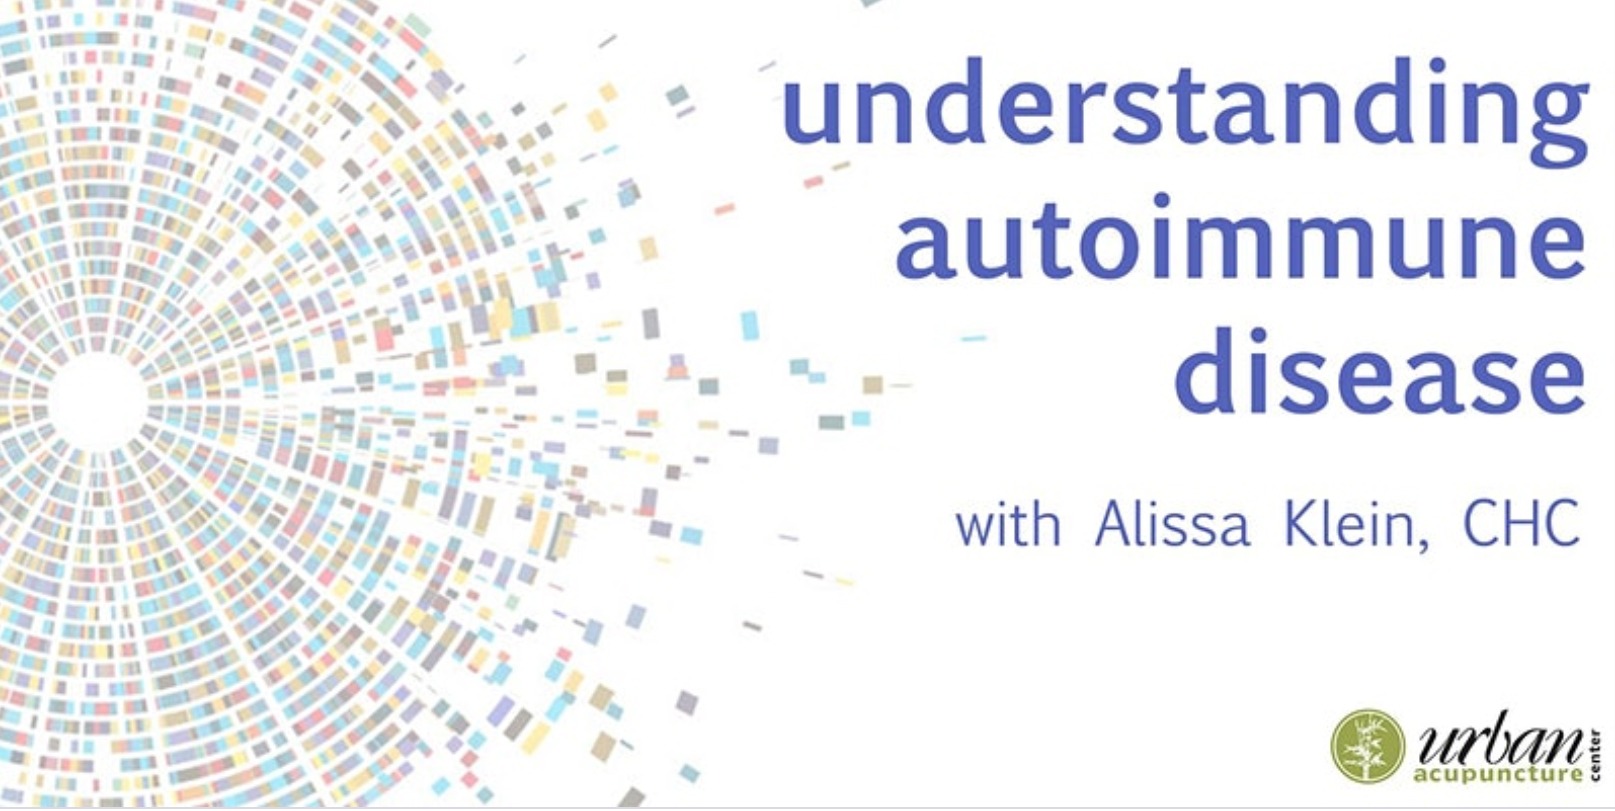 Online Event: Understanding Autoimmune Disease by UAC